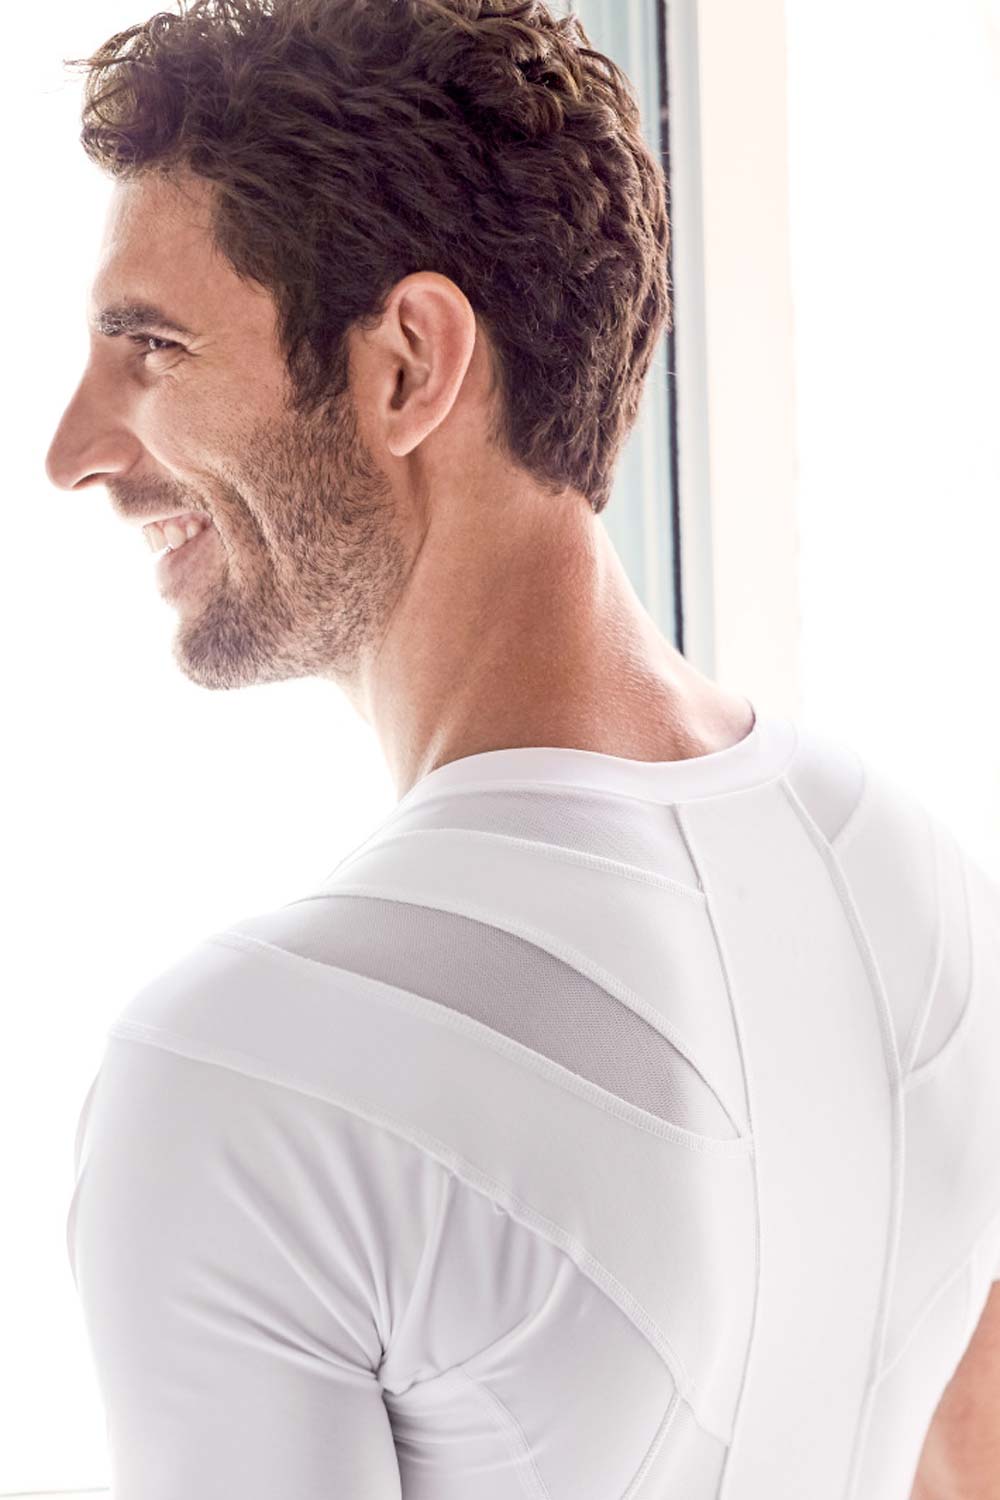 Underworks Mens Posture Corrector Compression Shirt - White - S